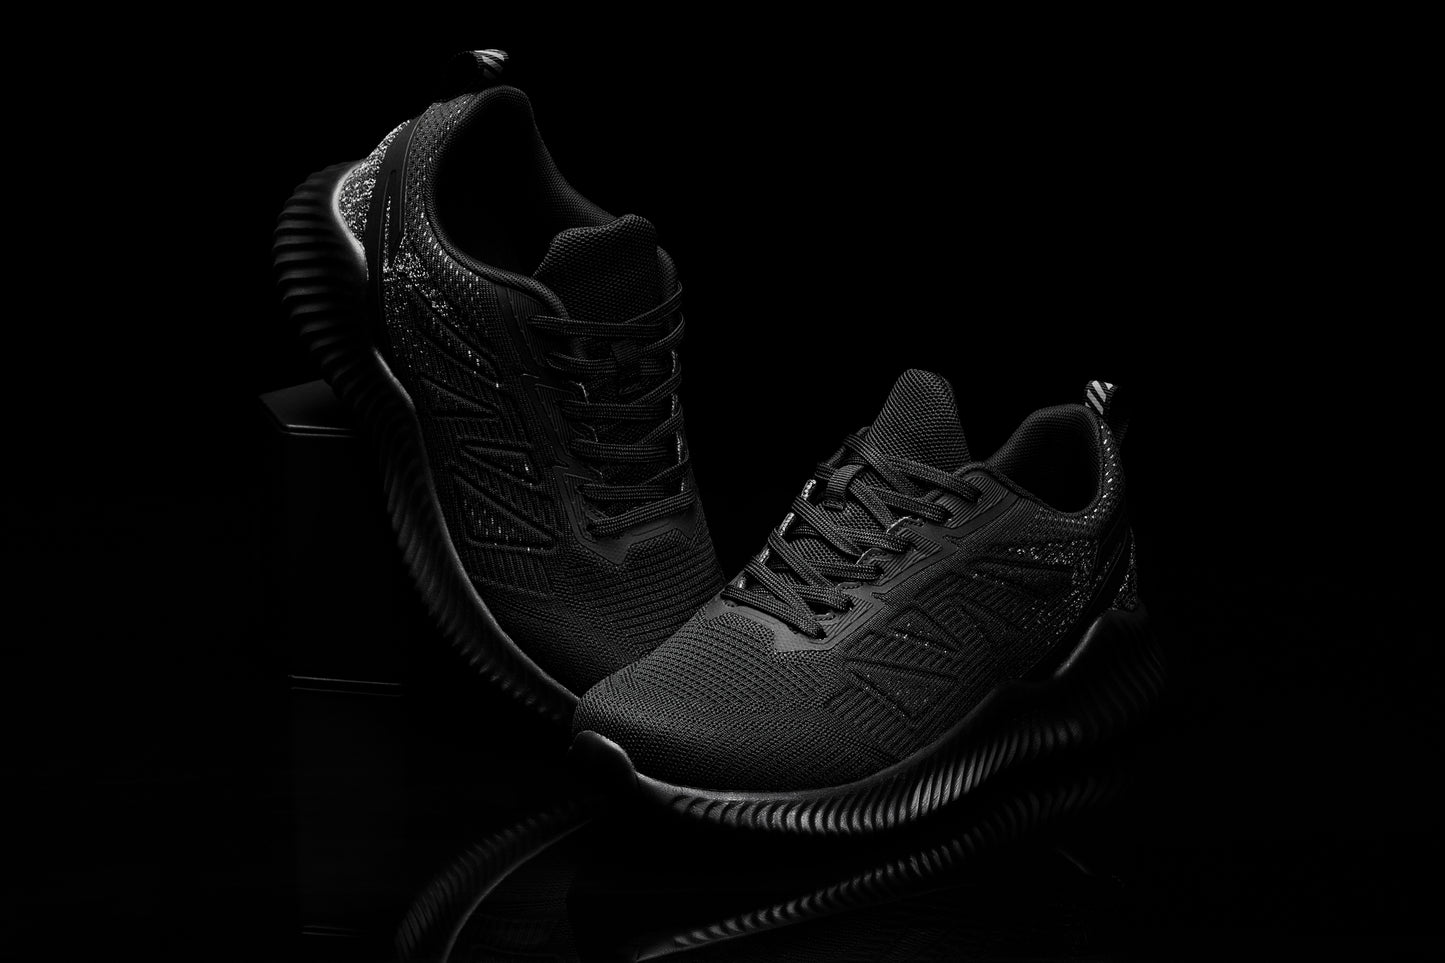 CALTO - Q220 - 2.6 Inches Taller (Noir/Cement) - Lightweight Sporty Sneakers